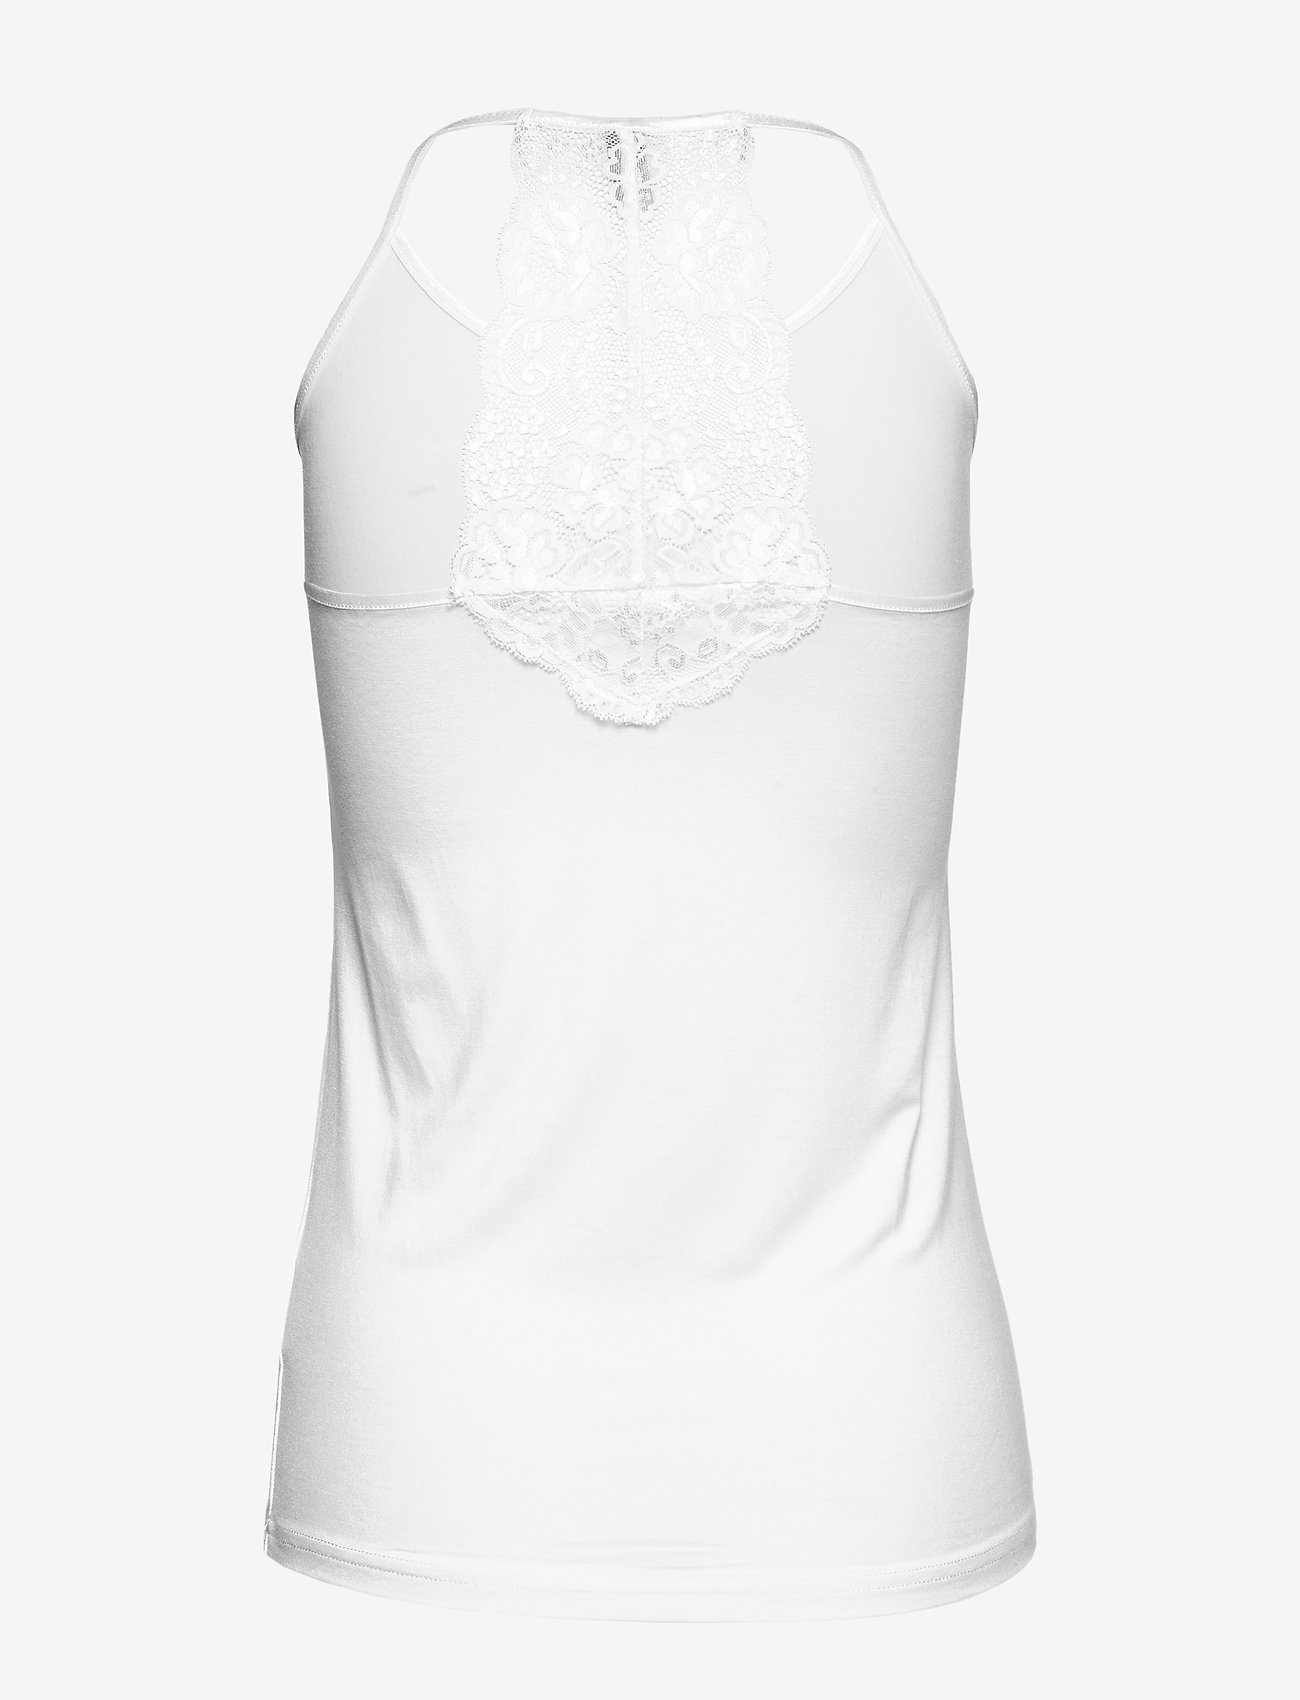 Culture - CUpoppy Lace Singlet - sleeveless tops - spring gardenia - 1